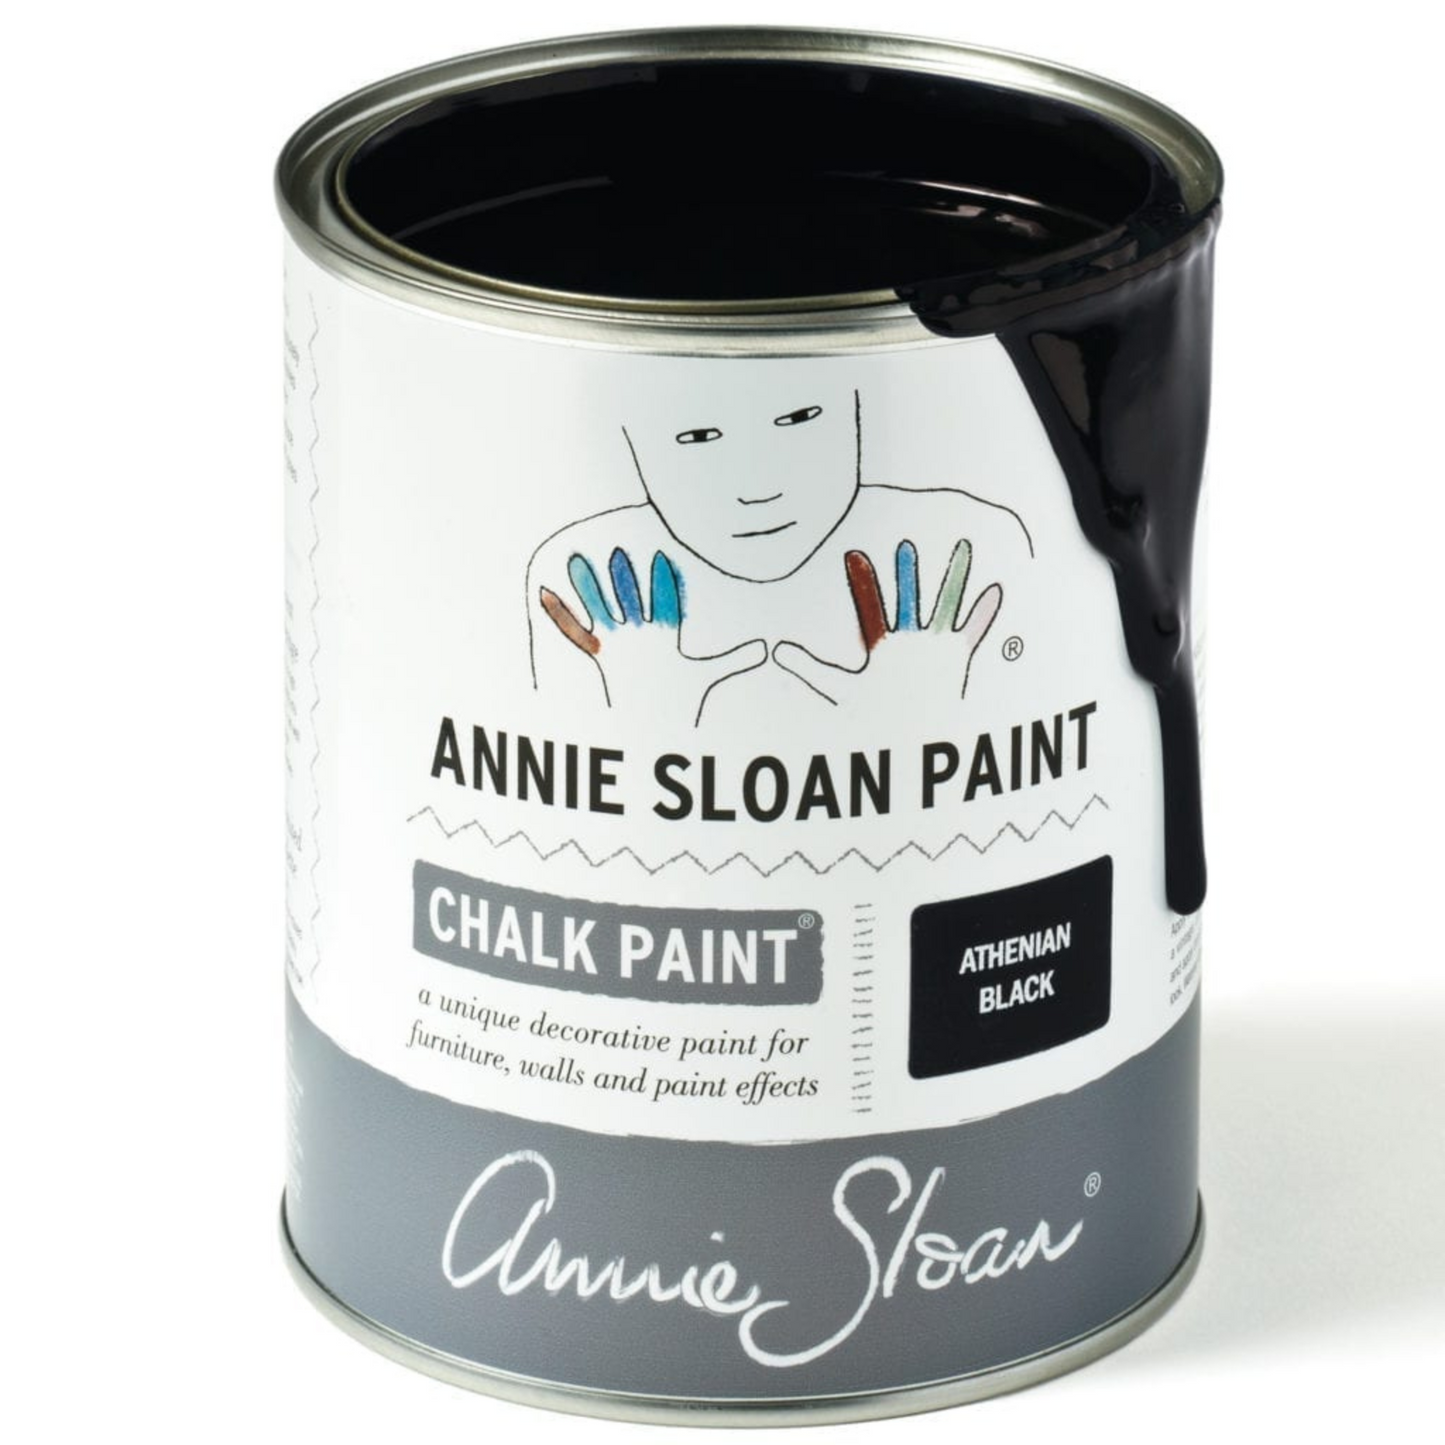 Can of athenian black annie sloan chalk paint